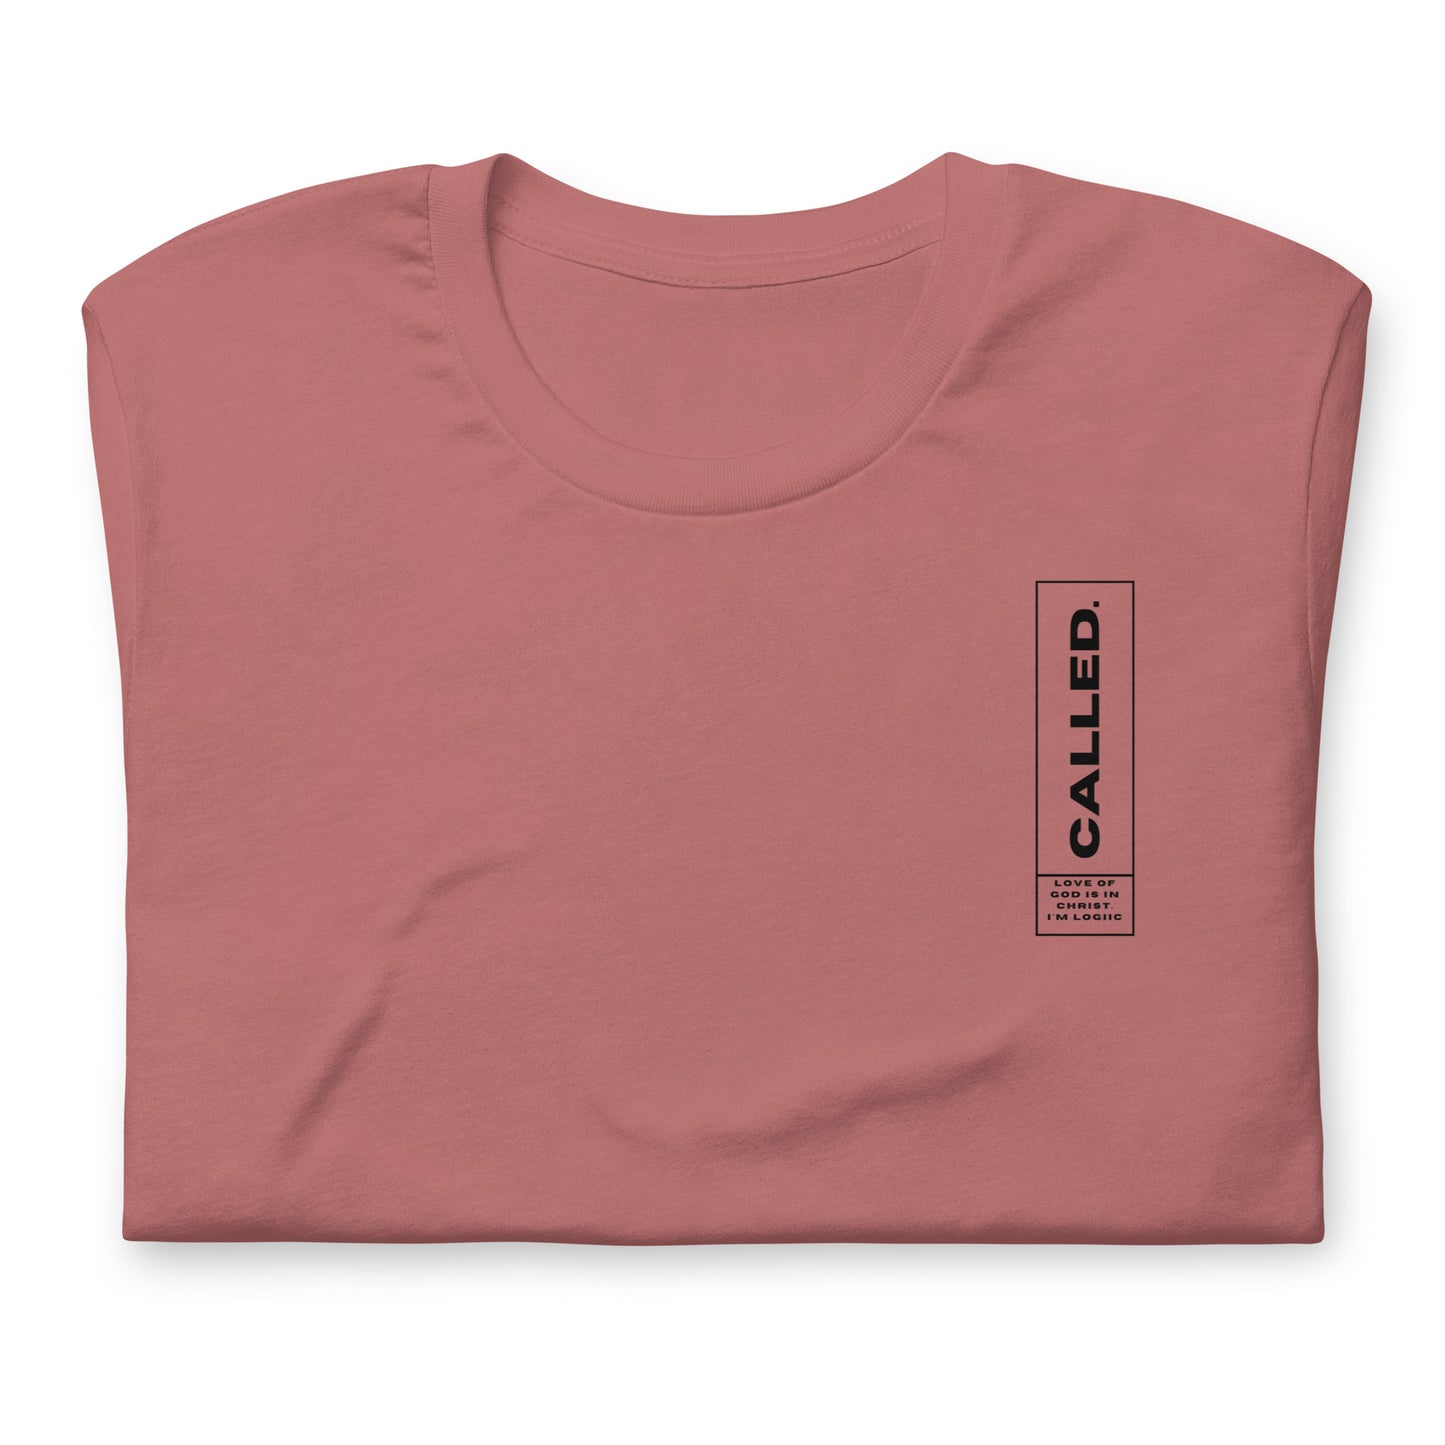 Called Unisex t-shirt - Shirts & Tops